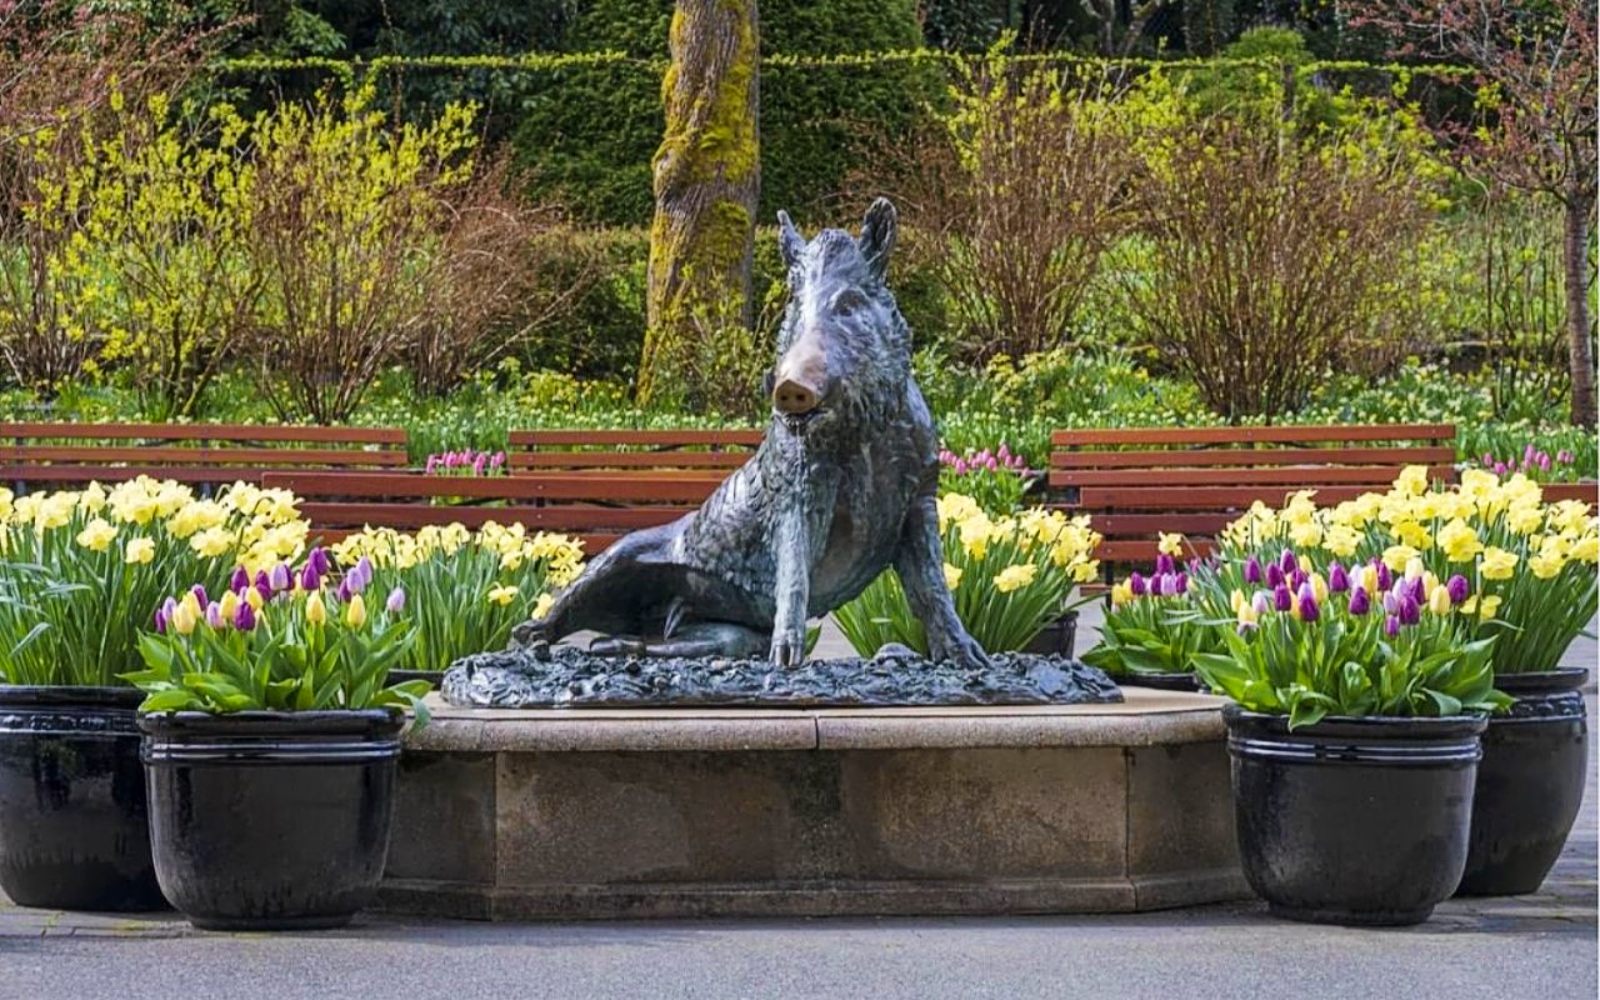 The Tacca wild boar statue, Butchart Gardens